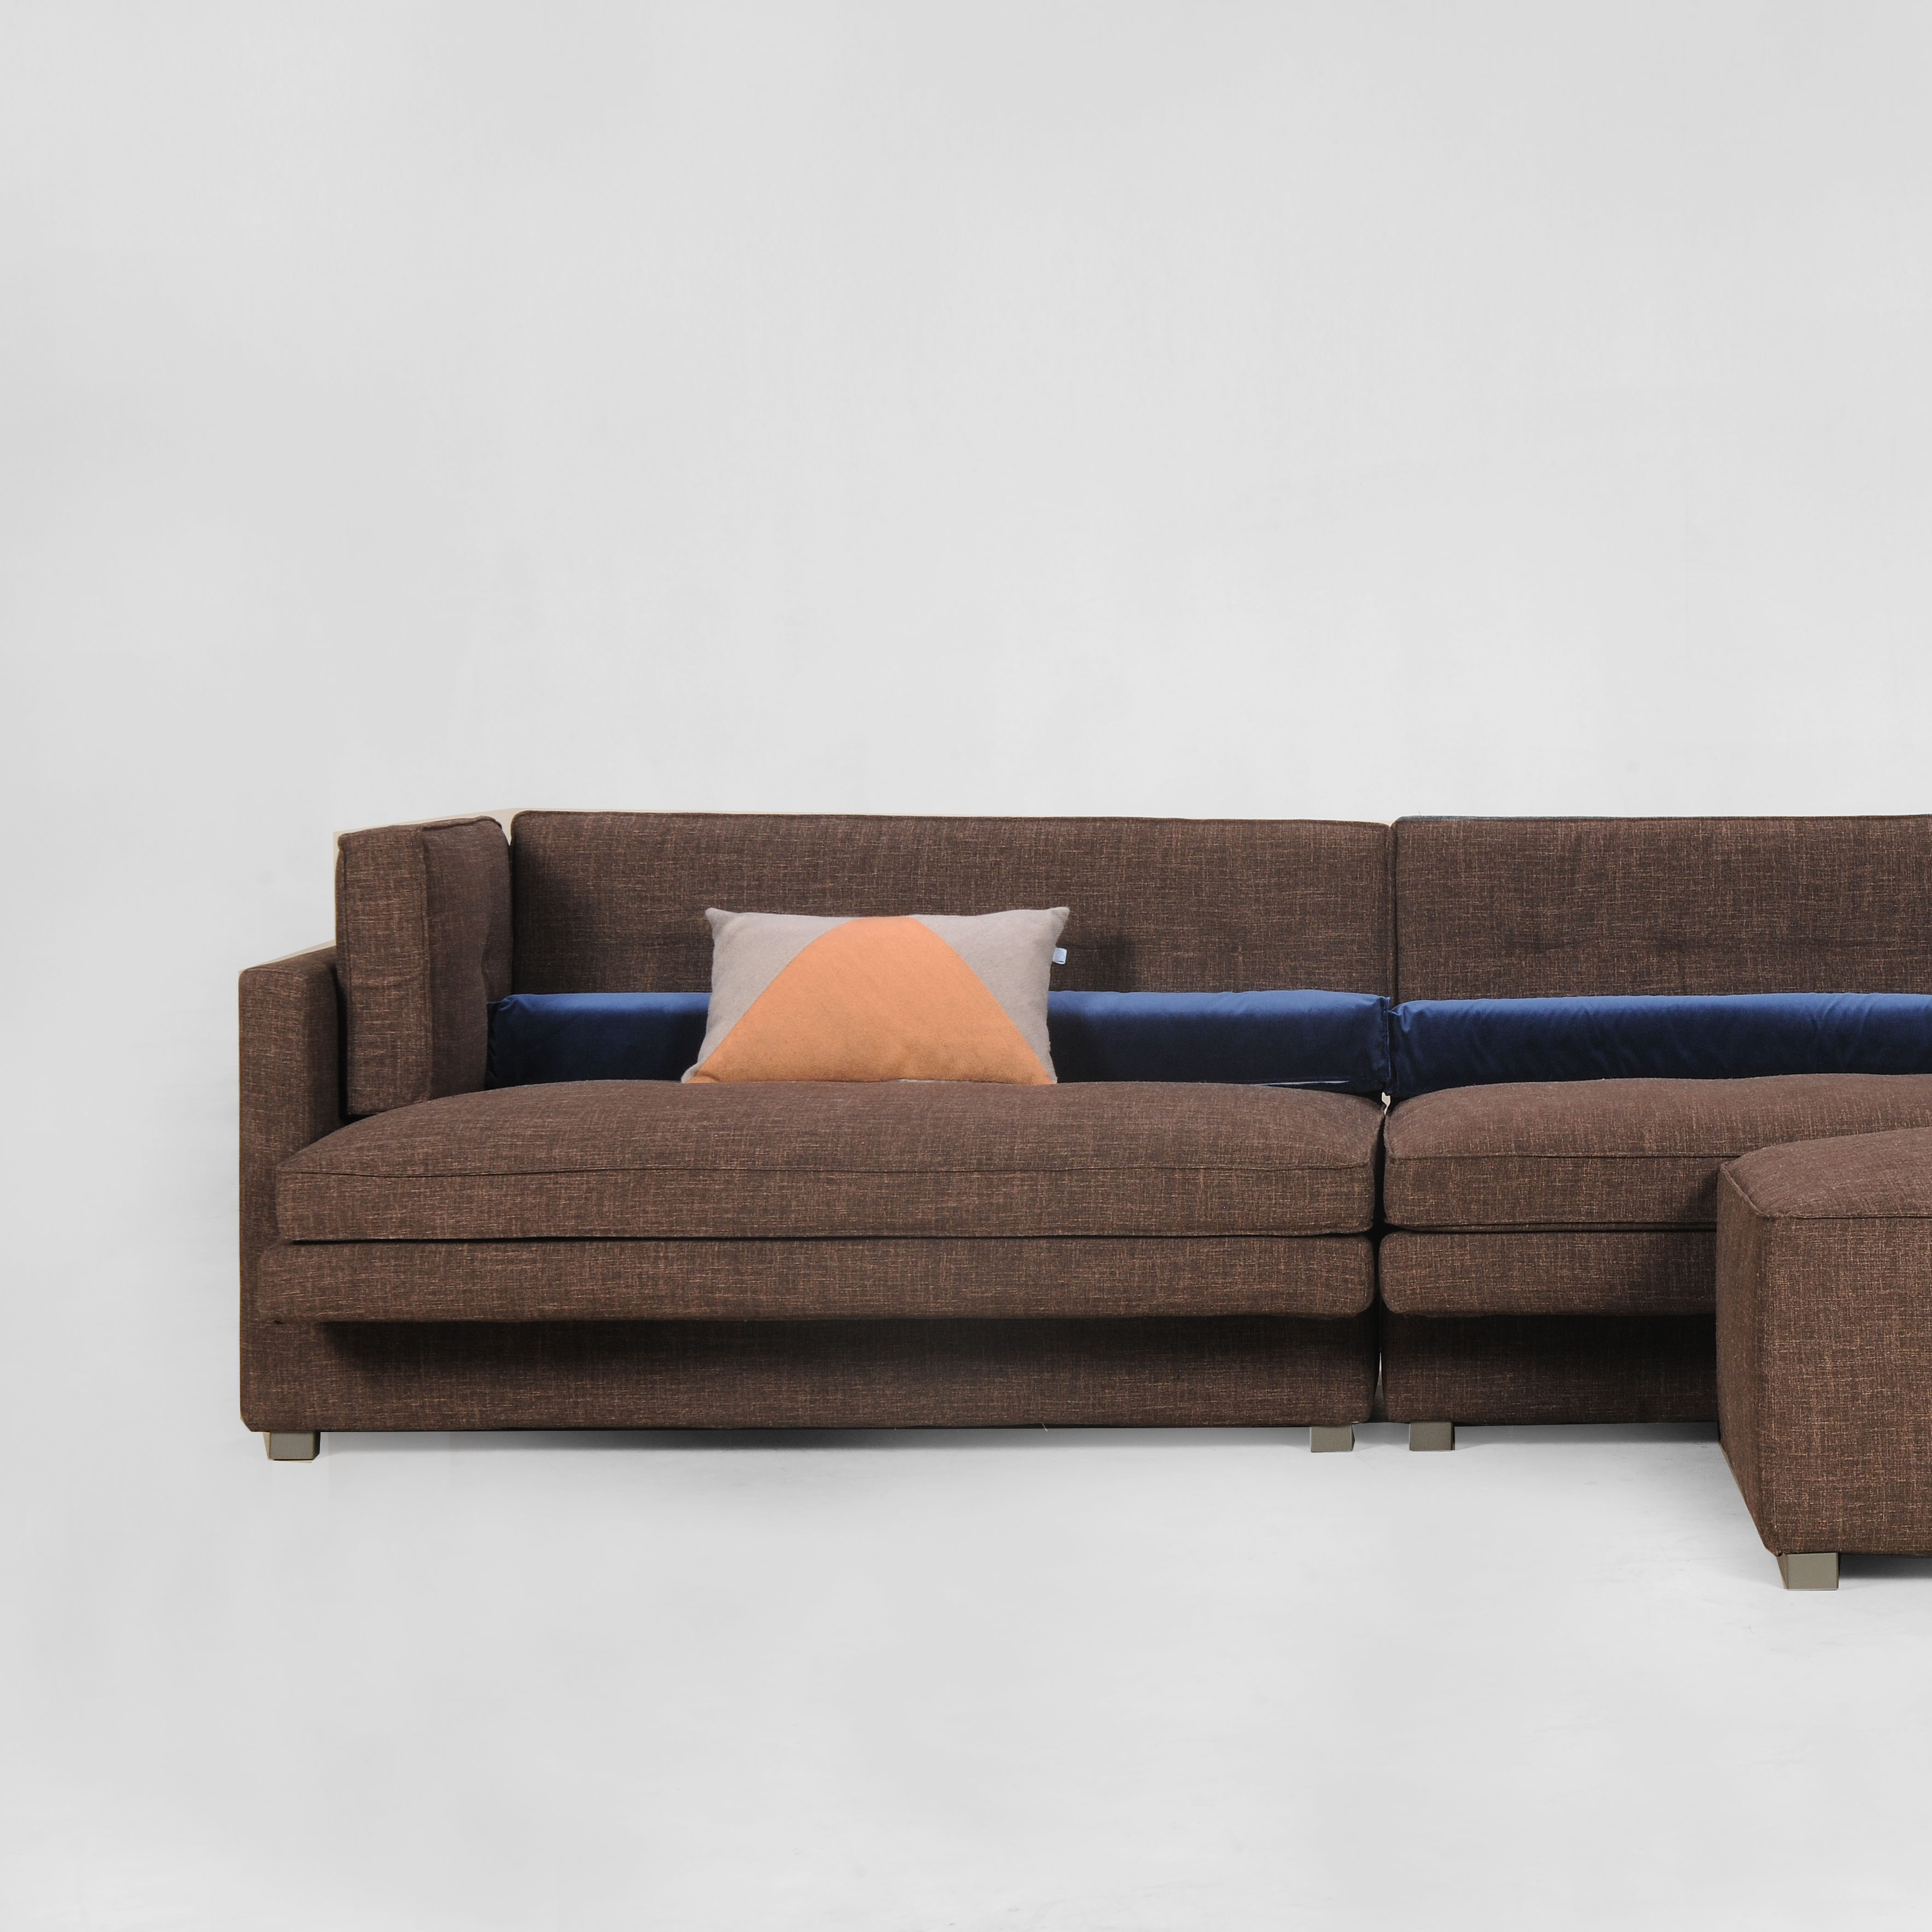 ZX-GLPS sofa 2015